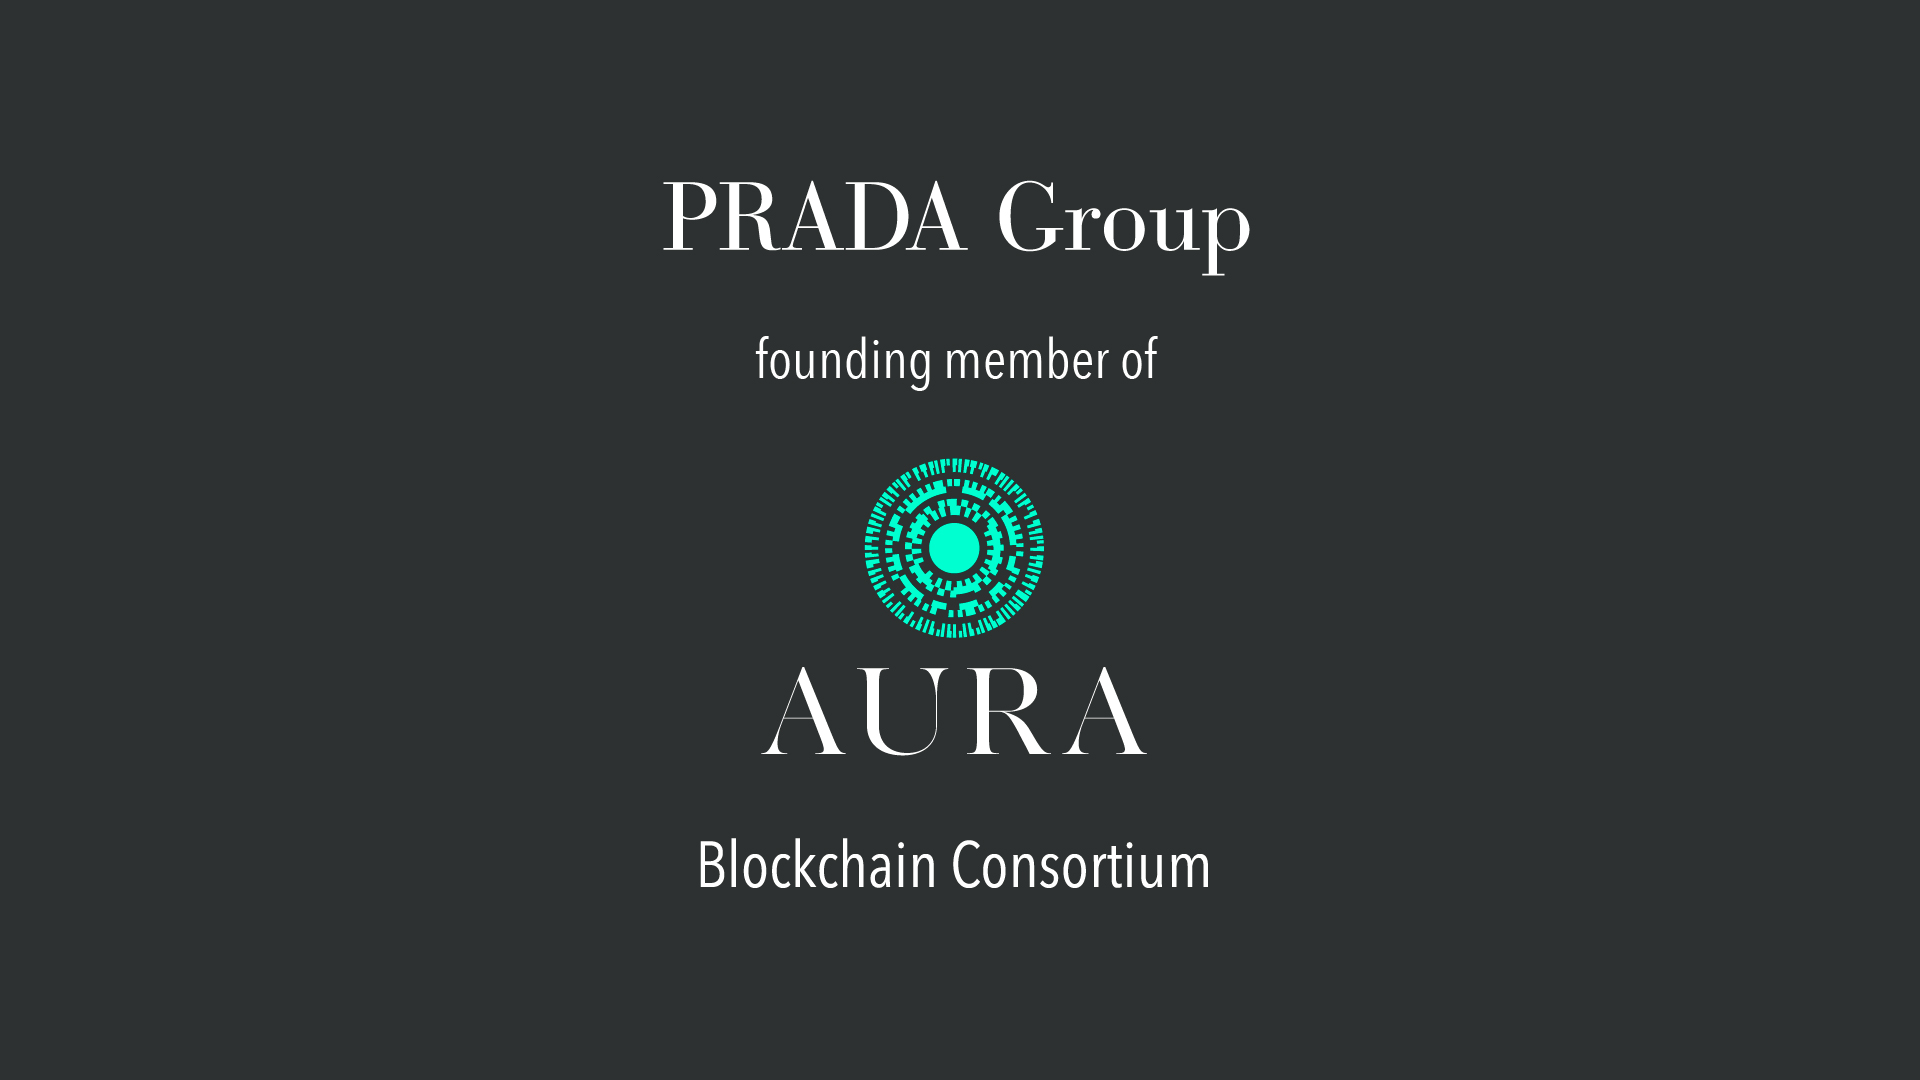 LVMH, Richemont and Prada Unite Behind a Blockchain Consortium